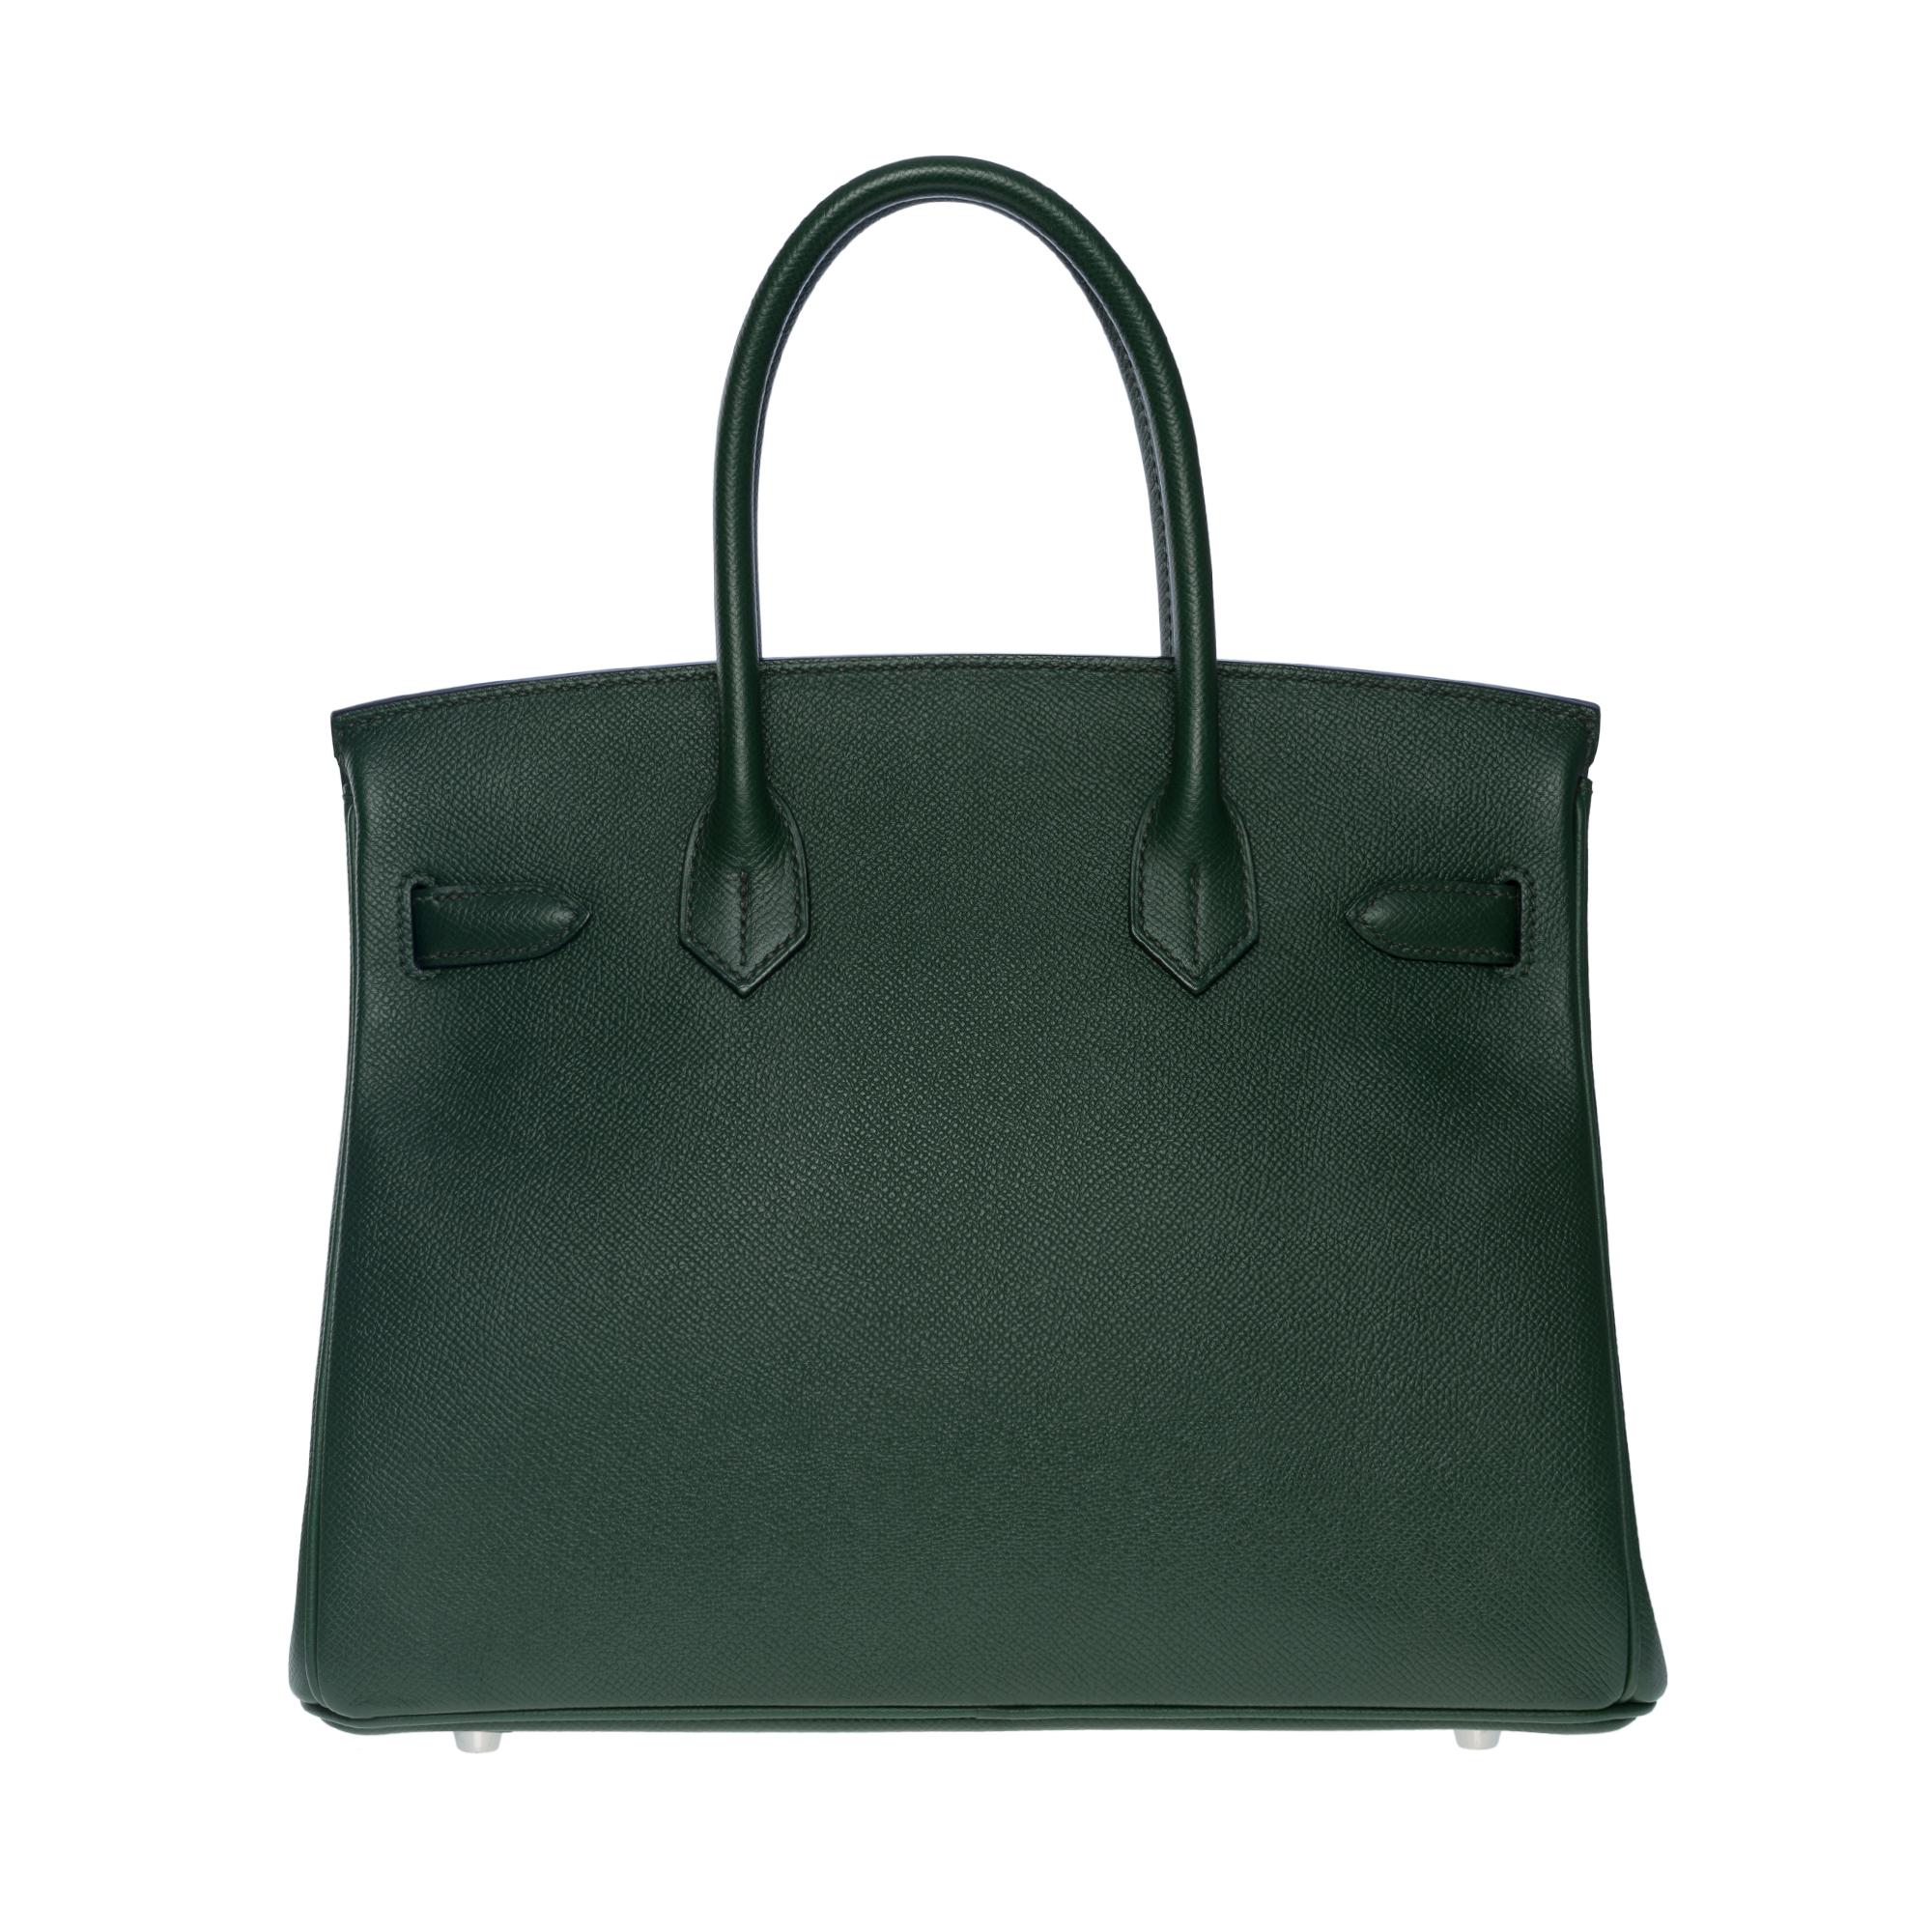 Orange Amazing & Rare Hermès Birkin 30 handbag in Vert Anglais Epsom leather, SHW For Sale